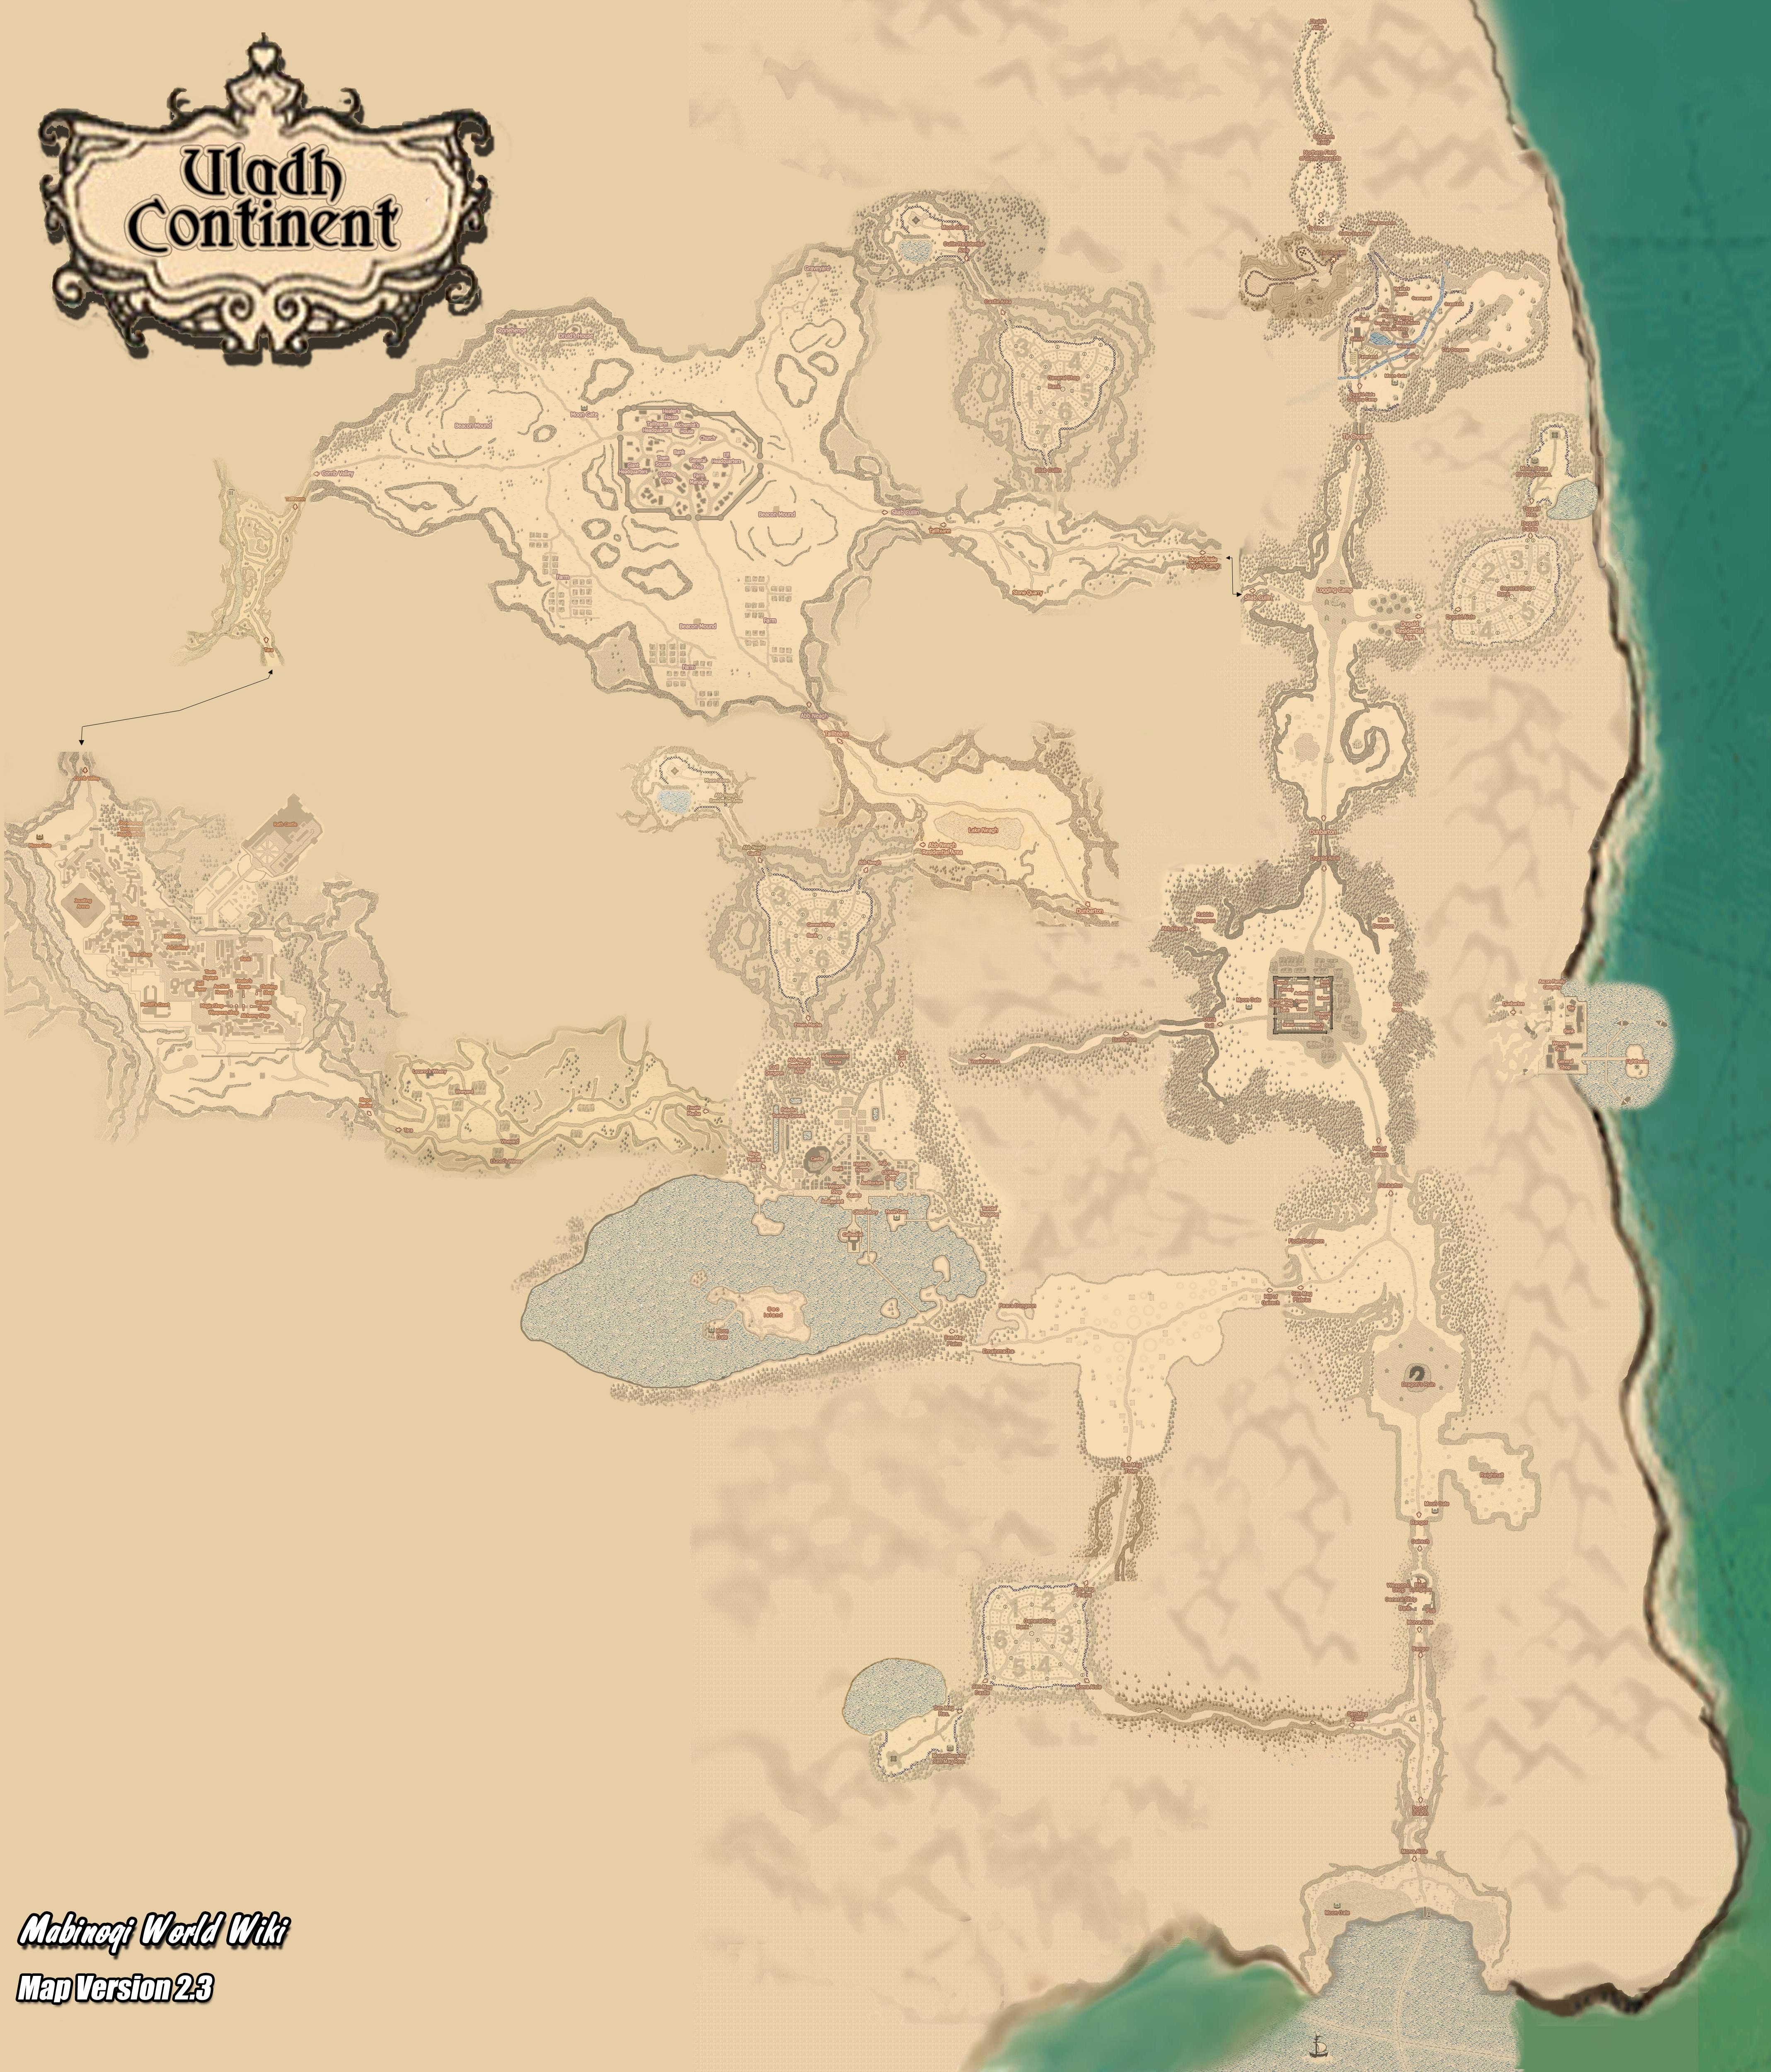 Uladh Mini map scaled